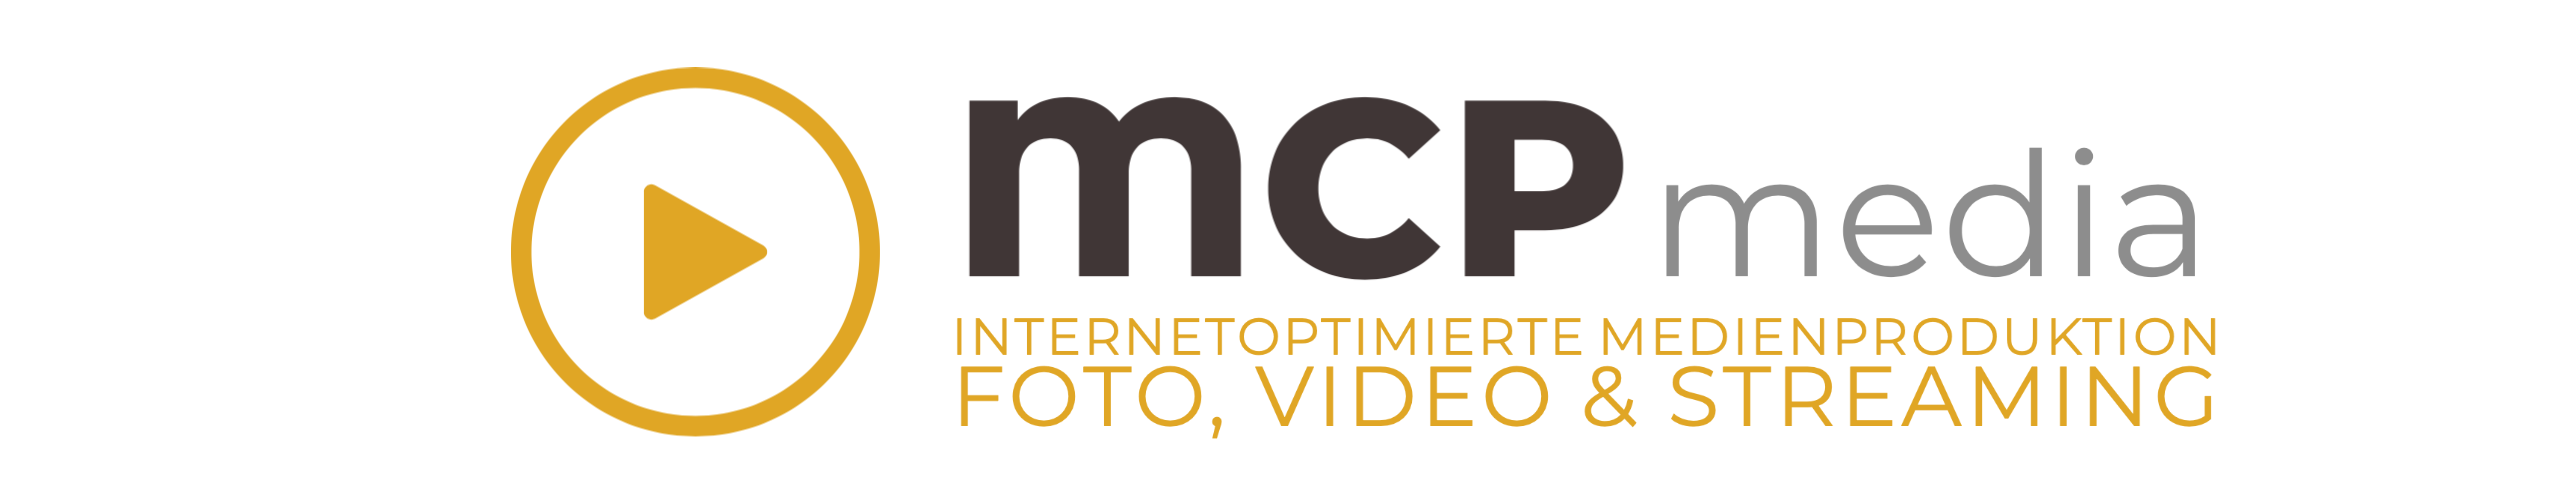 MCP media_4 cicd-2_transp